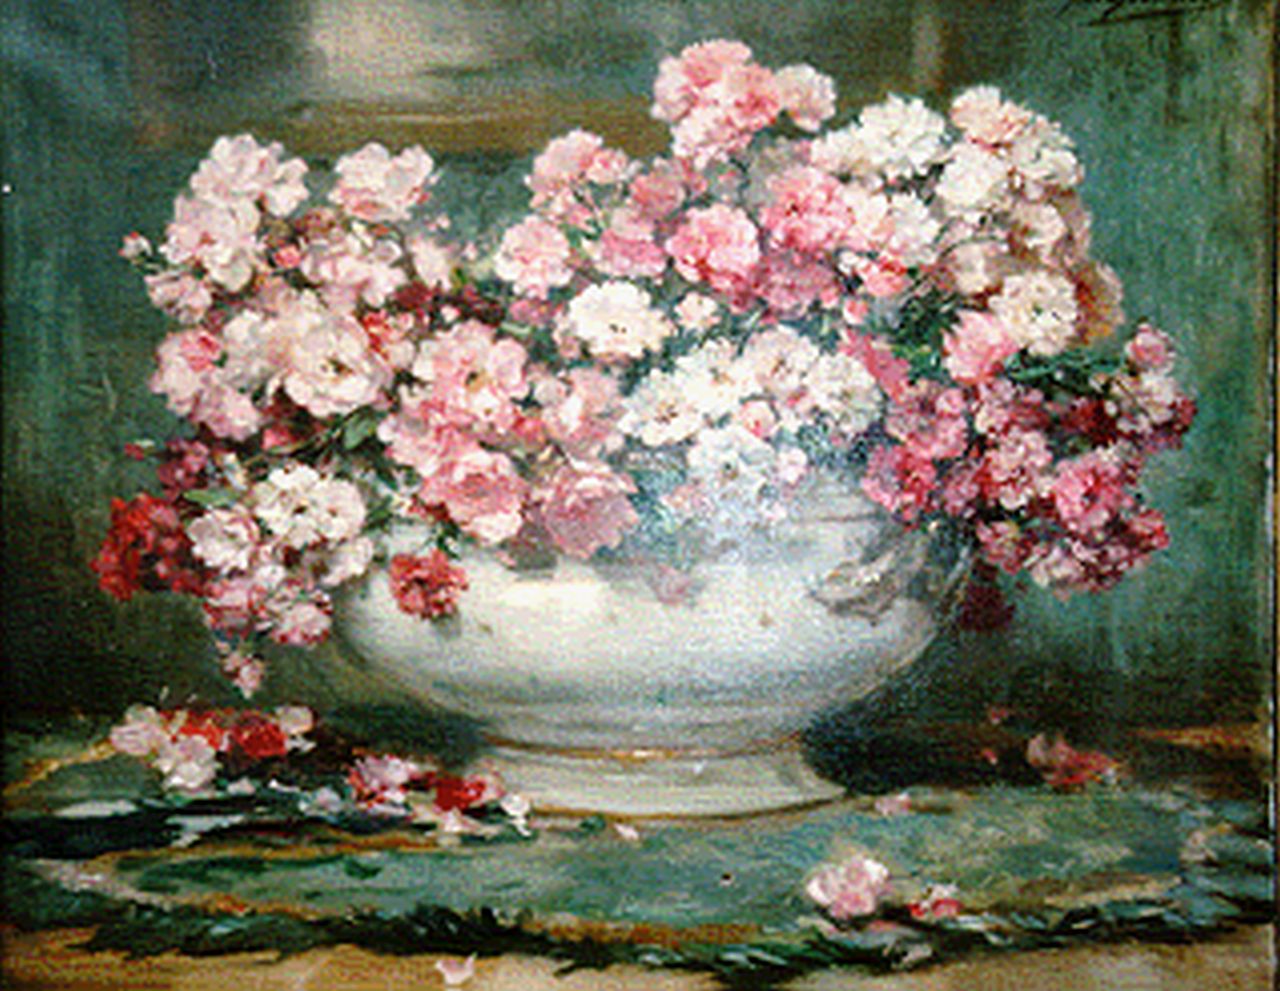 Gouweloos J.L.H.  | 'Jean' Léon Henri Gouweloos, A Flower Still life, Öl auf Leinwand 65,3 x 81,0 cm, signed u.r.